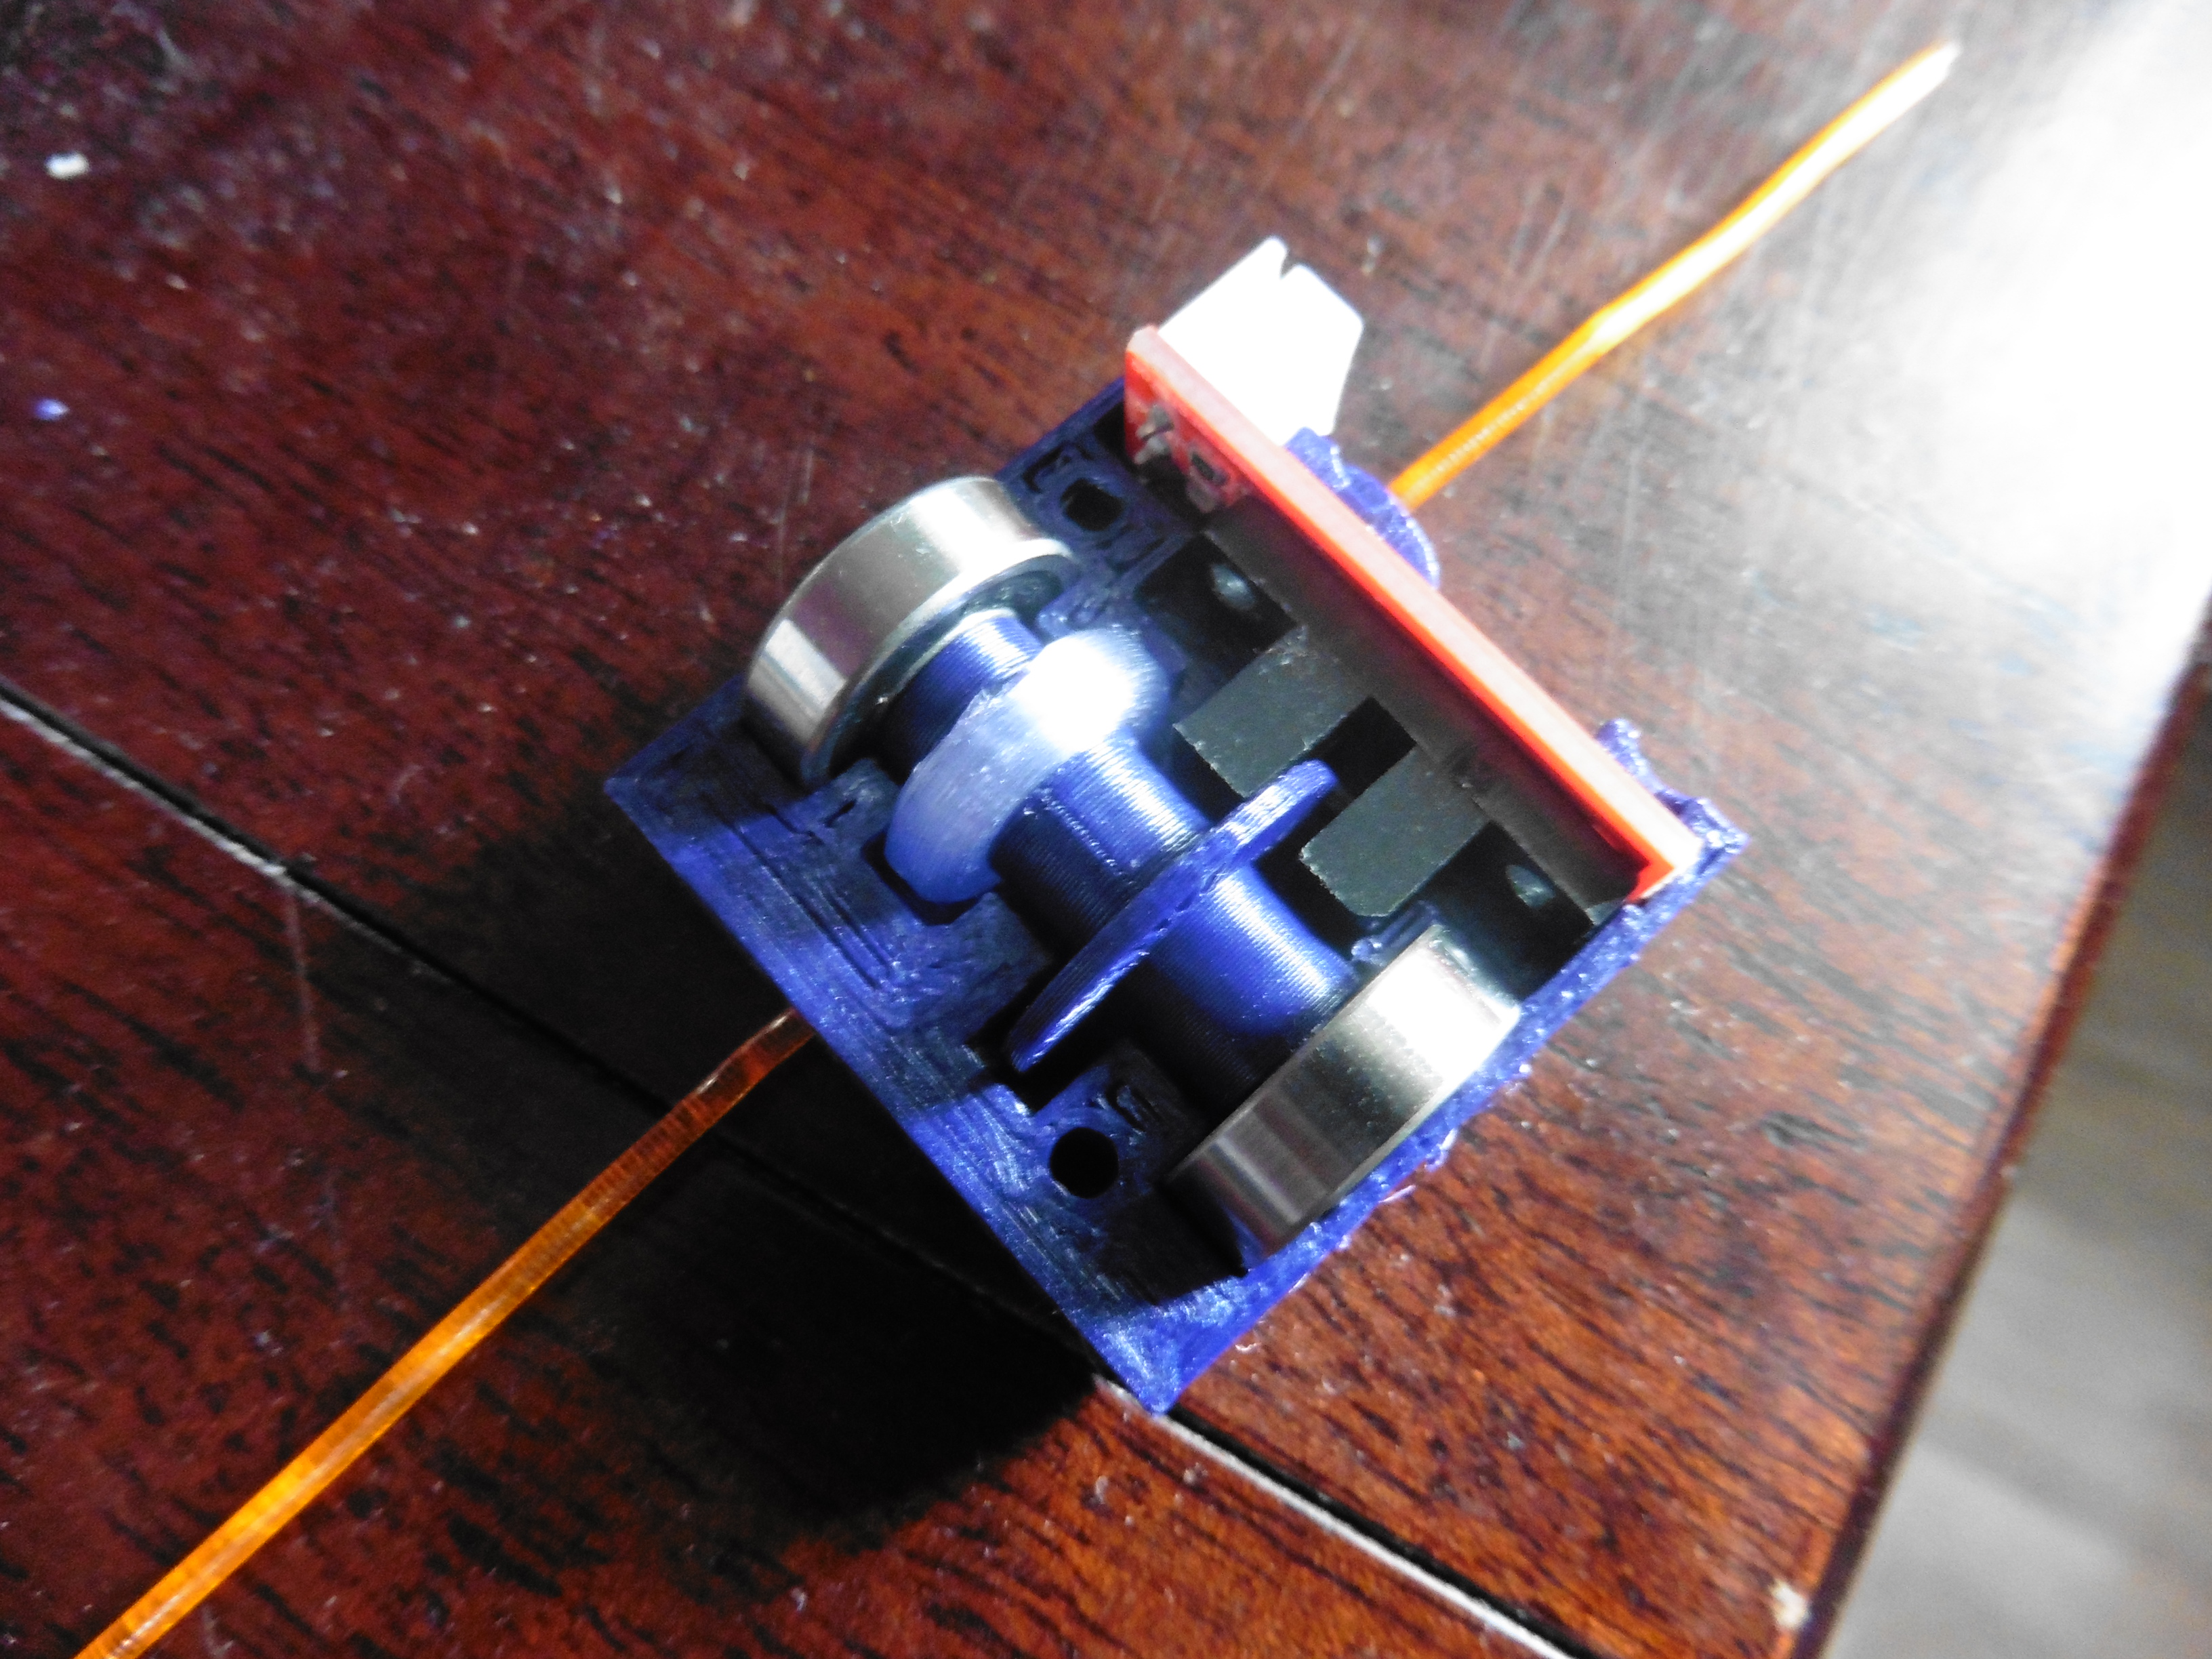 Filament Jam Detection using an Optical Endstop